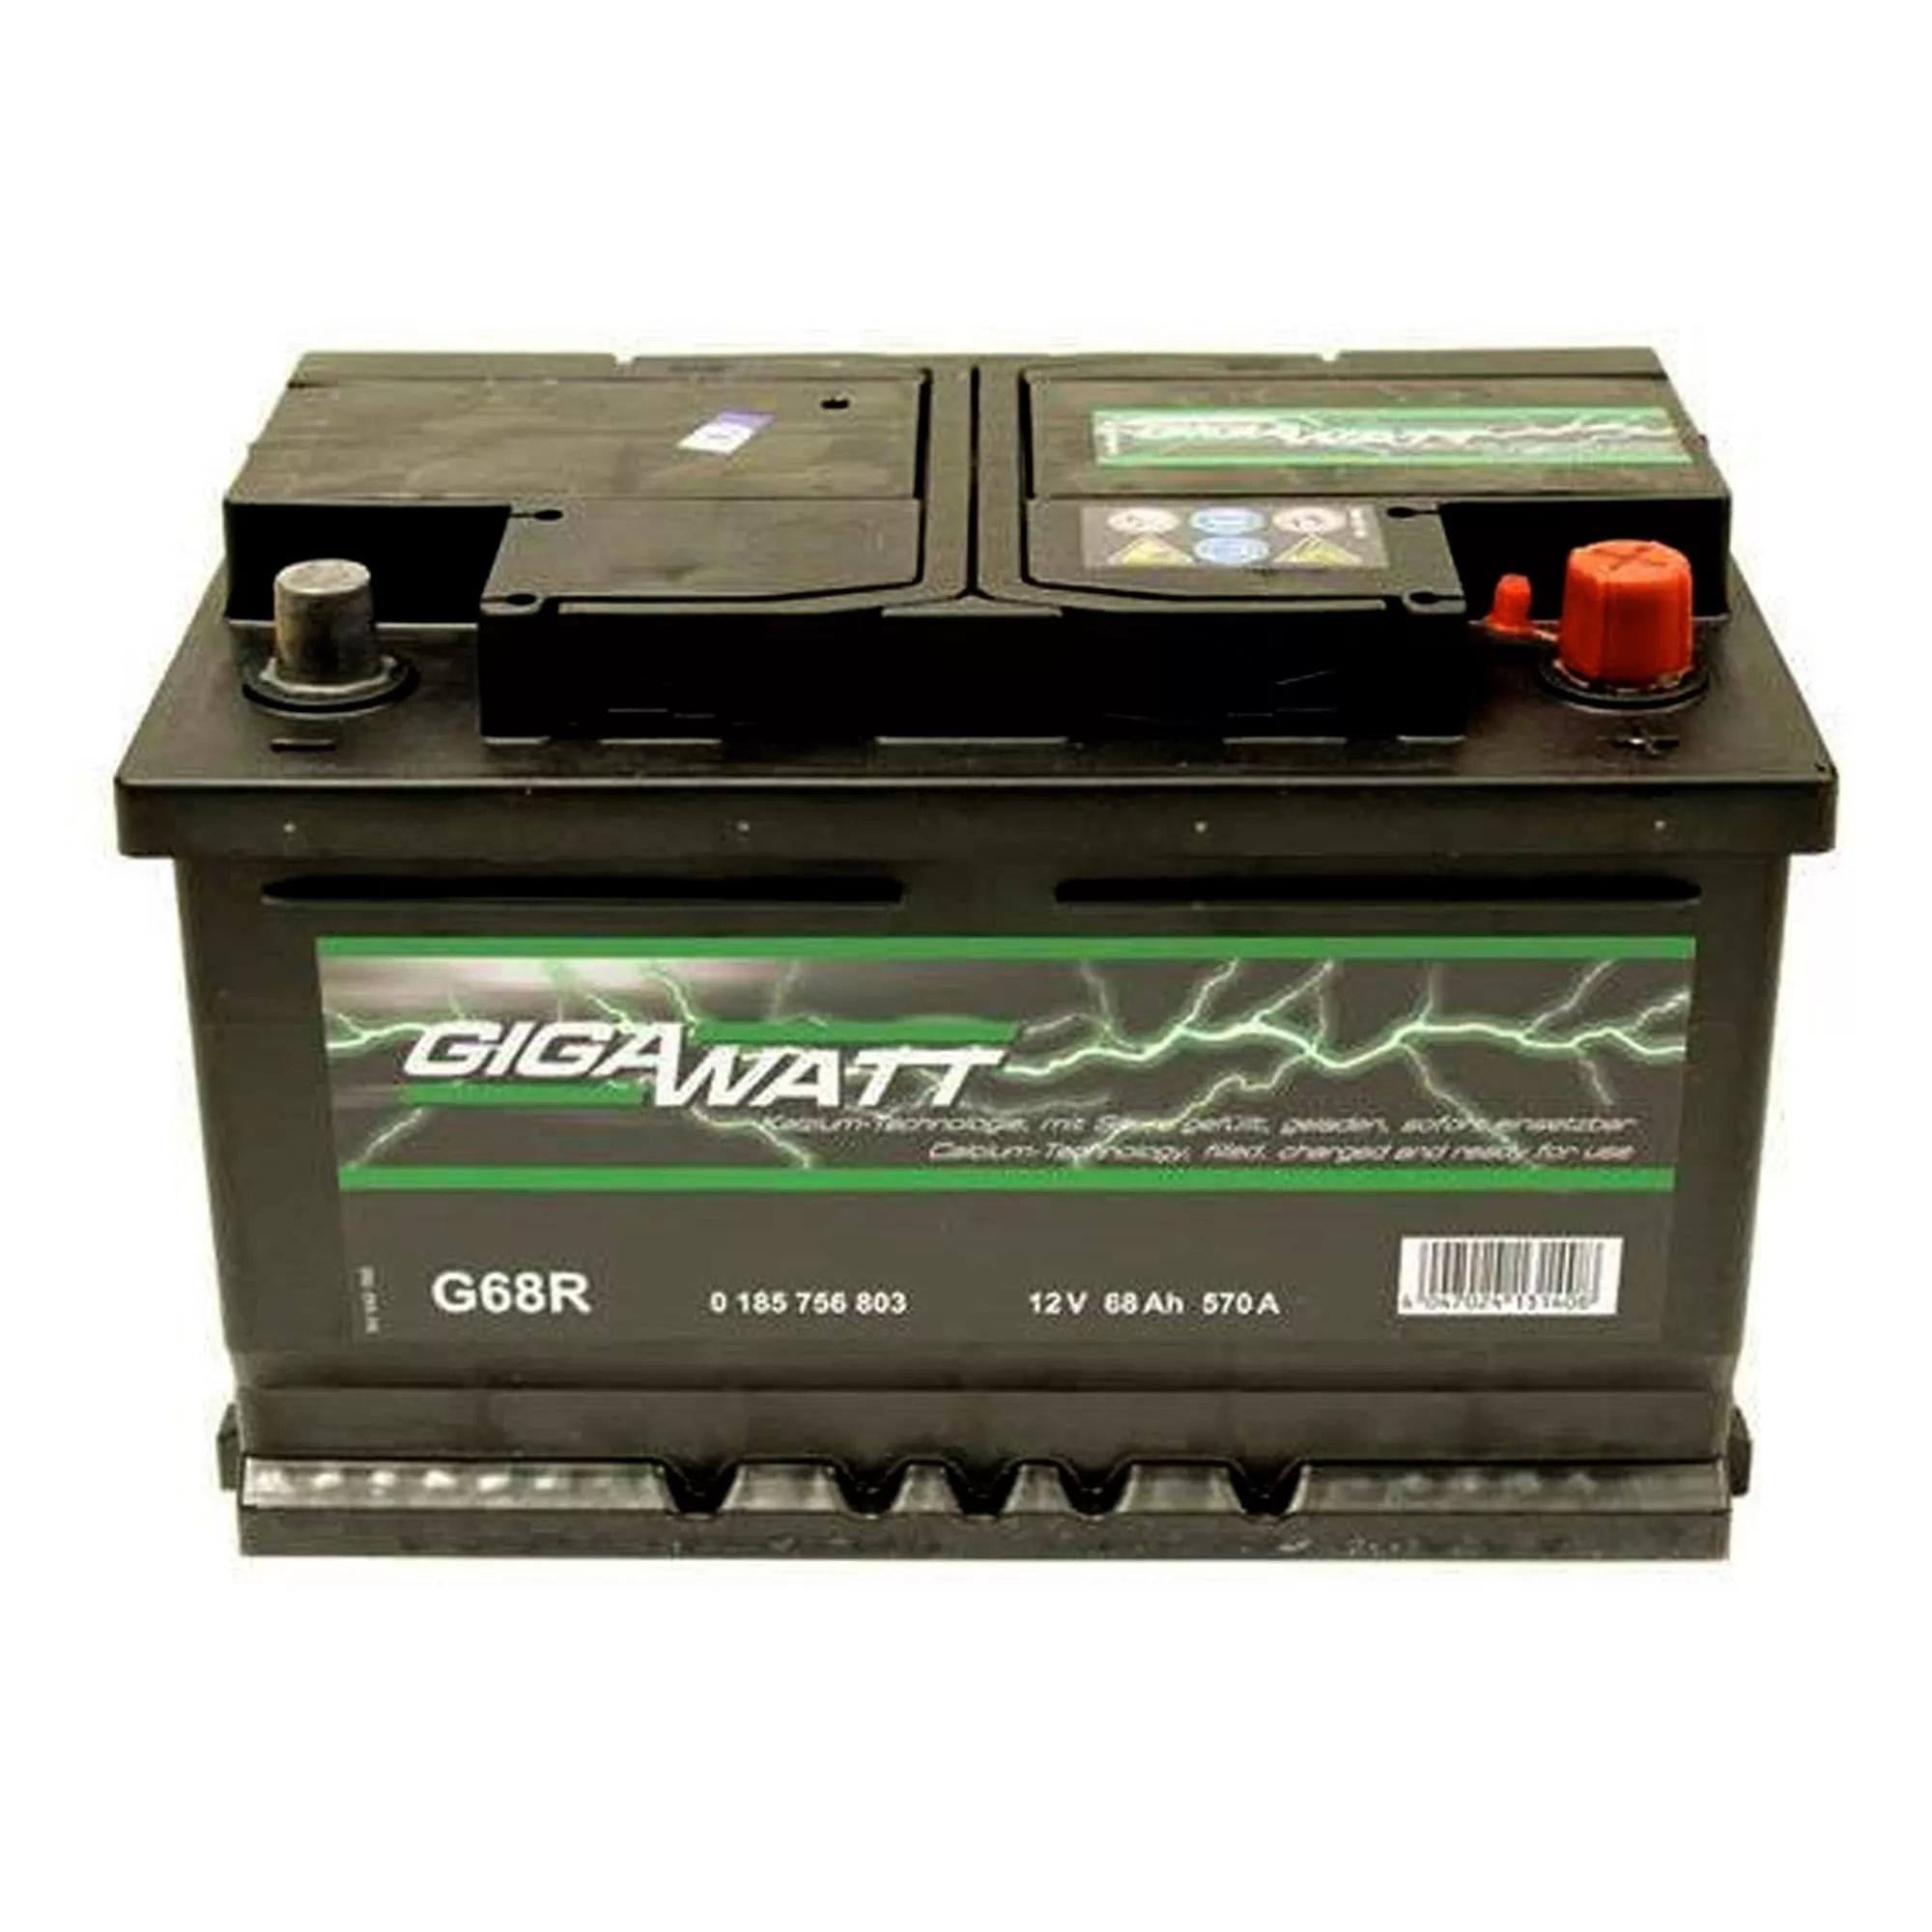 Автомобильный аккумулятор GIGAWATT G68R 6CT-68Ah 570A АзЕ (0185756803)